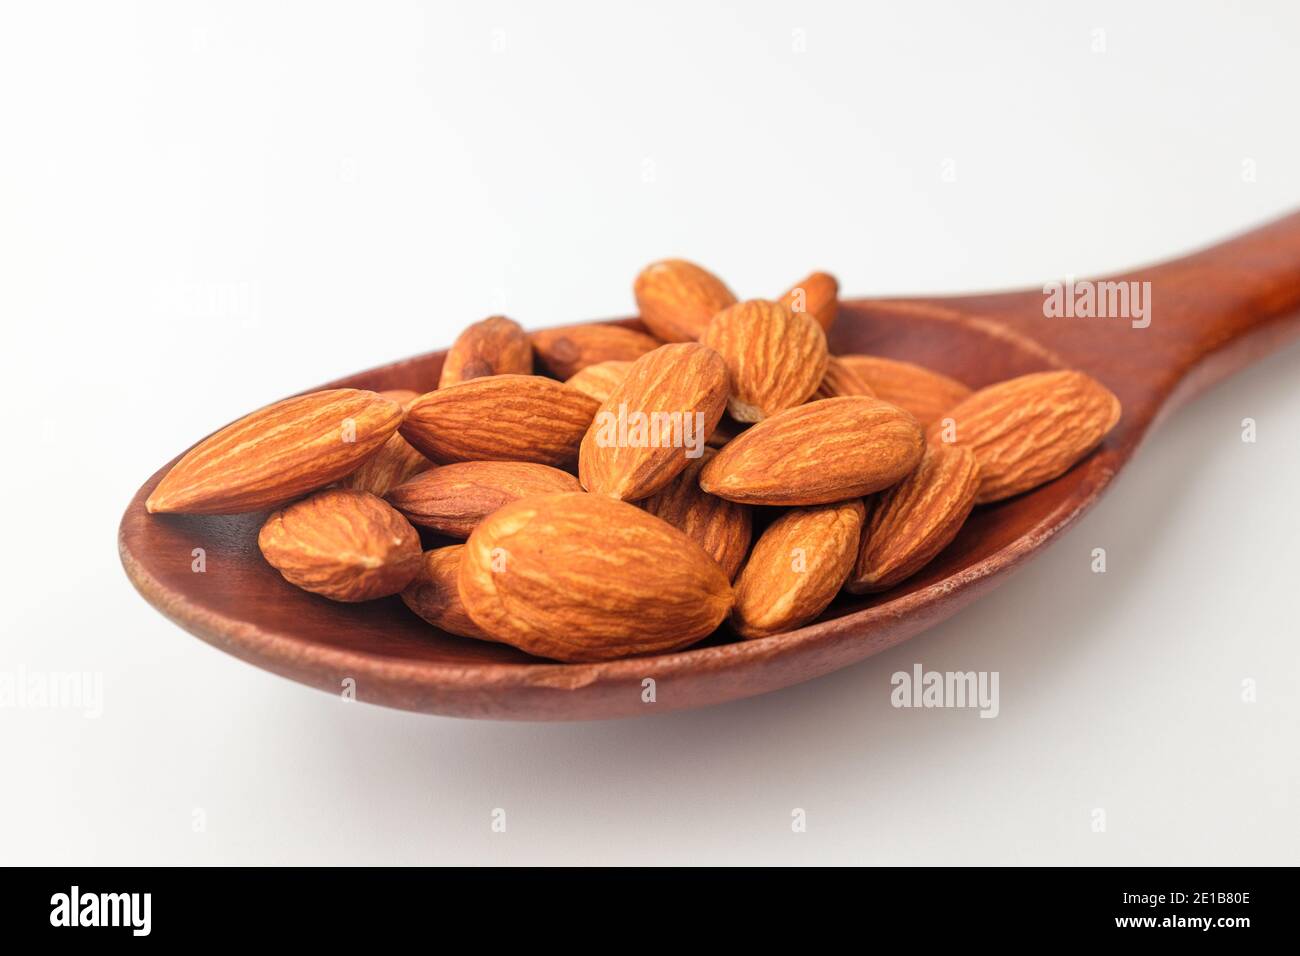 Savory almonds on white background Stock Photo